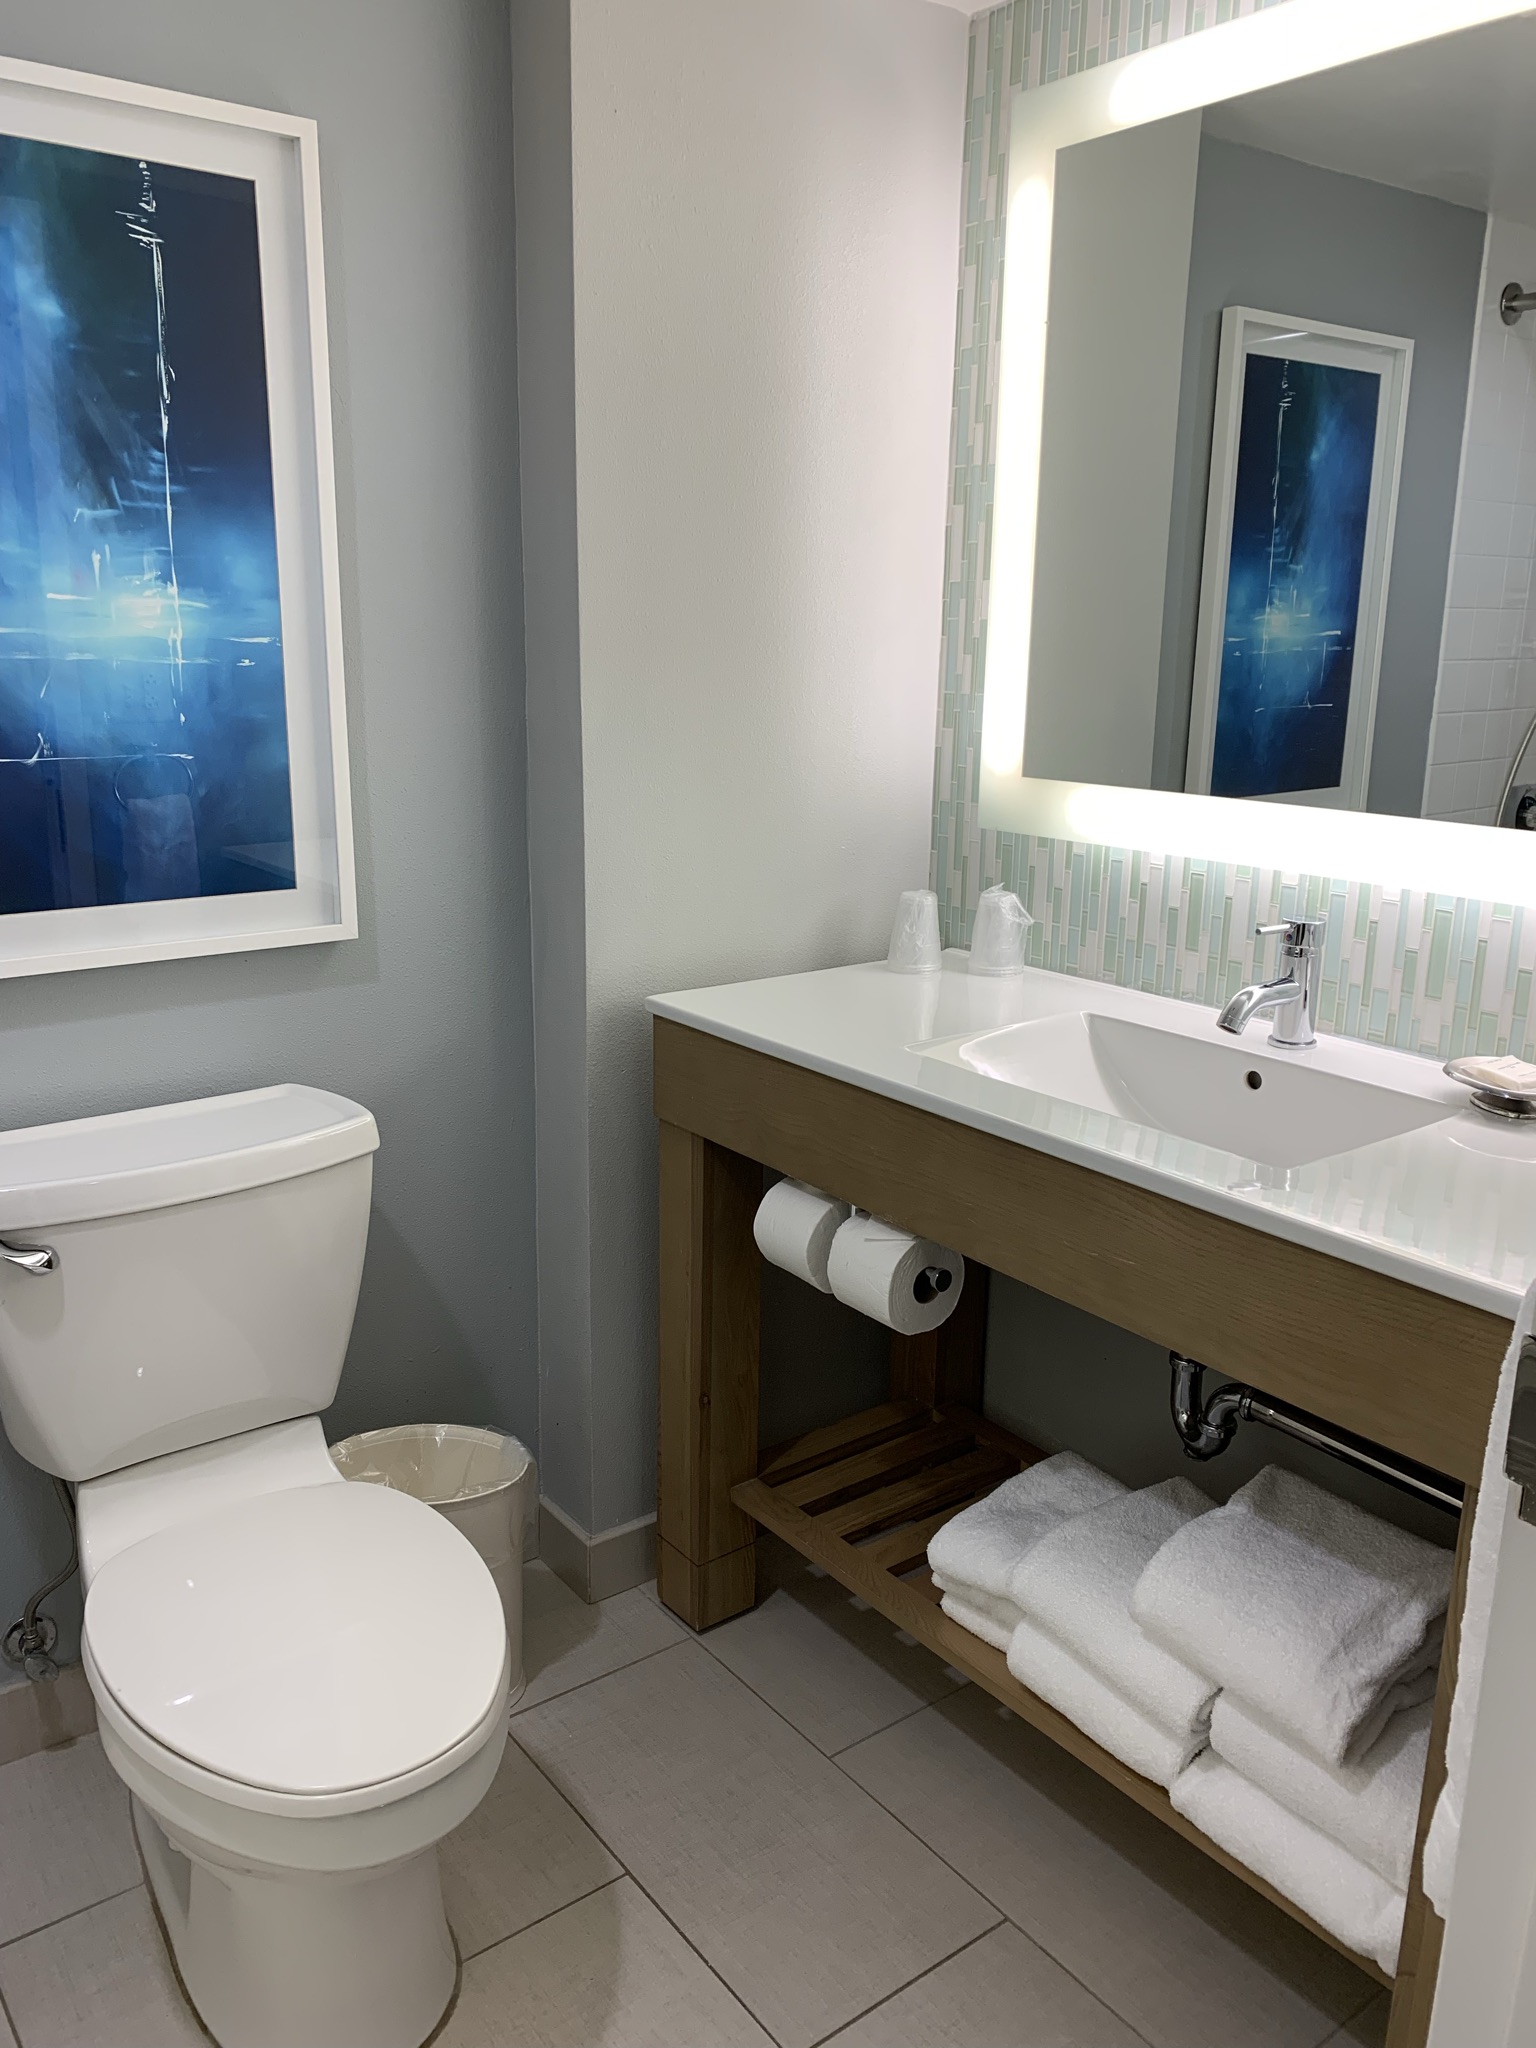 bathroom sink at disney swan hotel